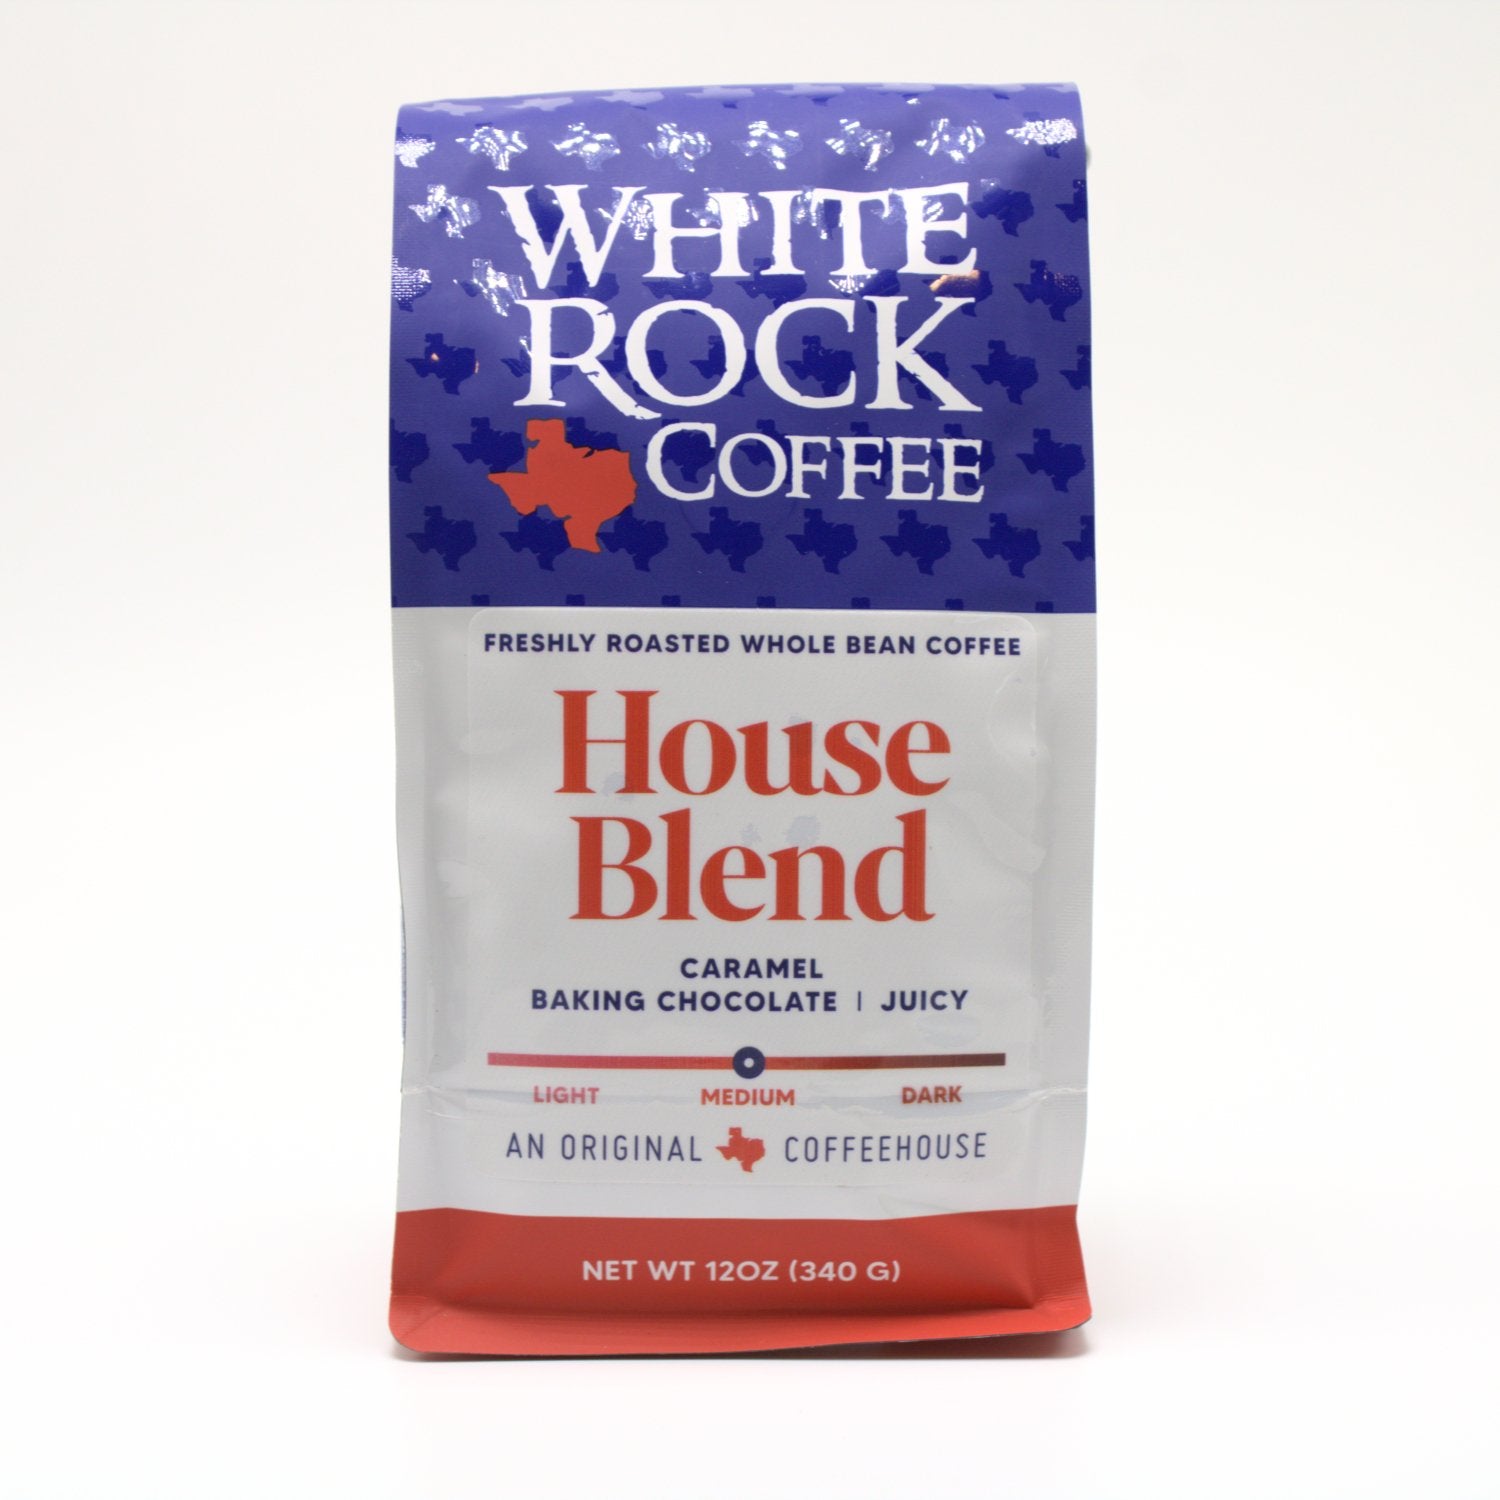 House Blend - White Rock Coffee